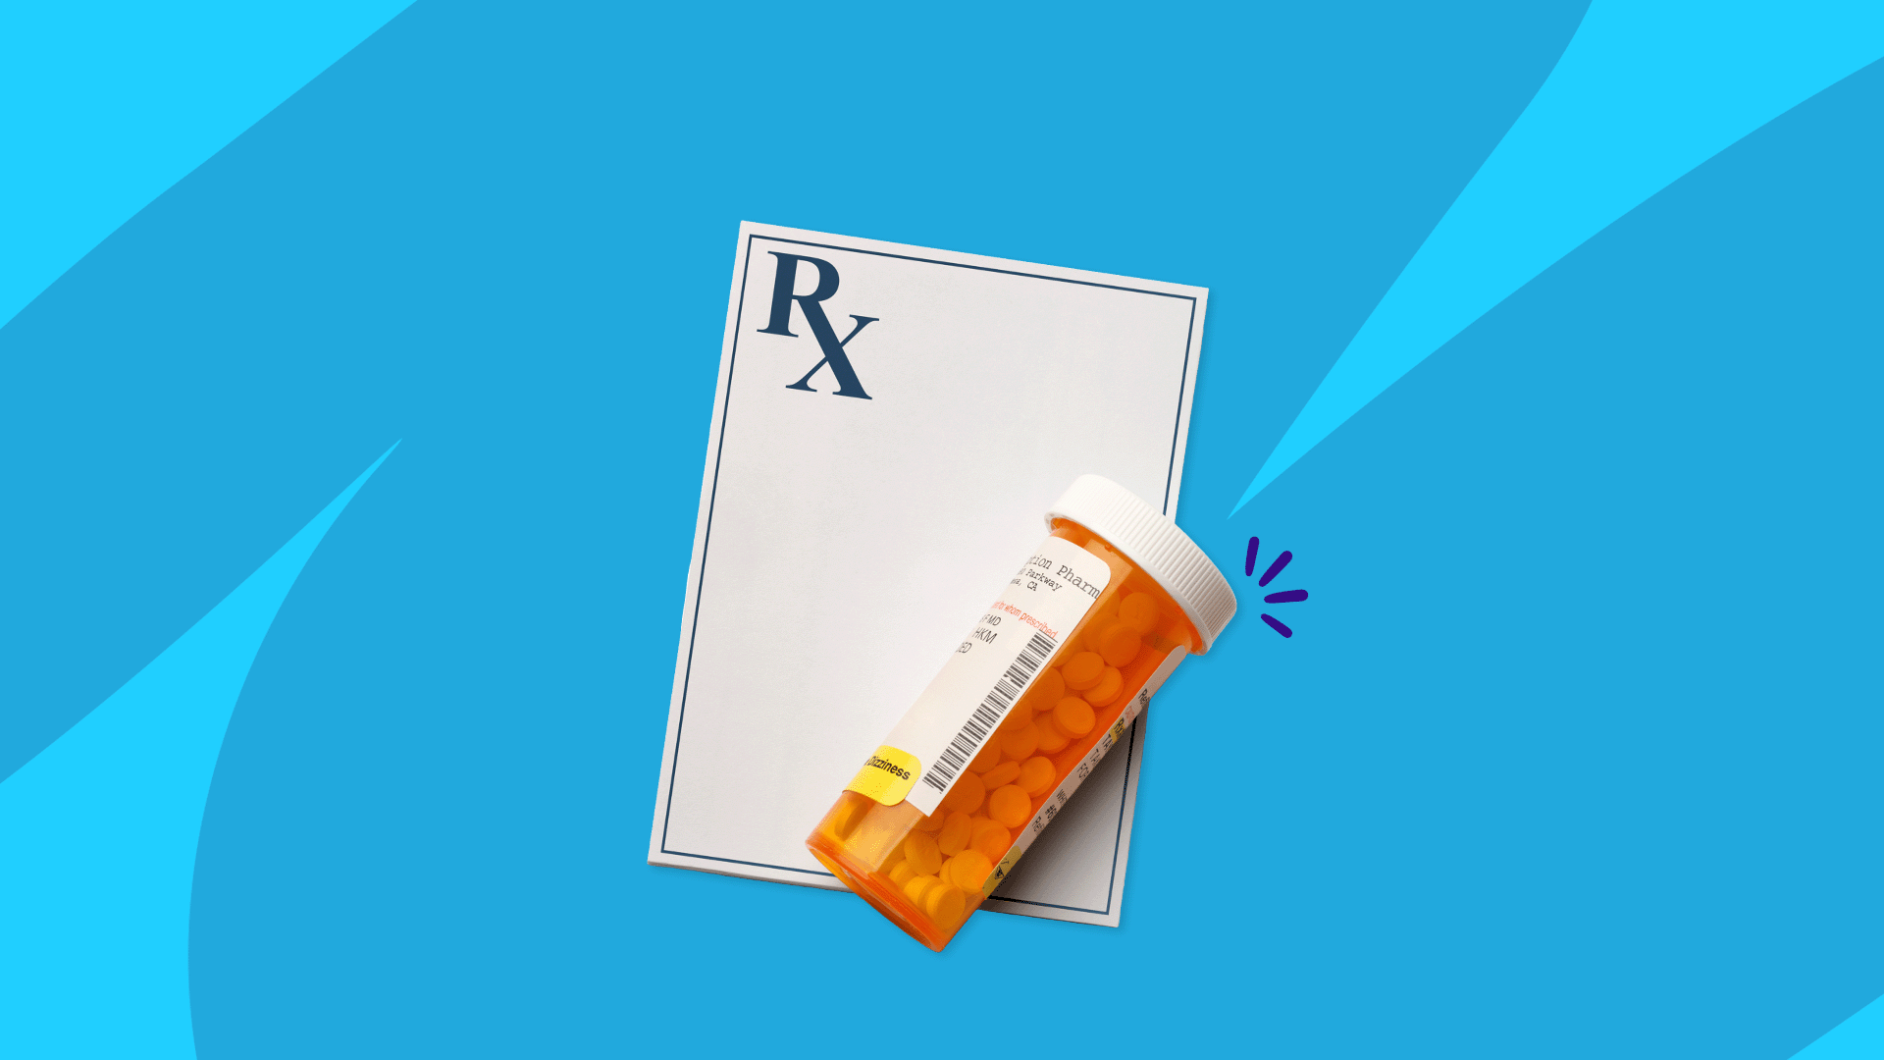 Rx prescription pd and Rx pill bottle: Zoloft generic